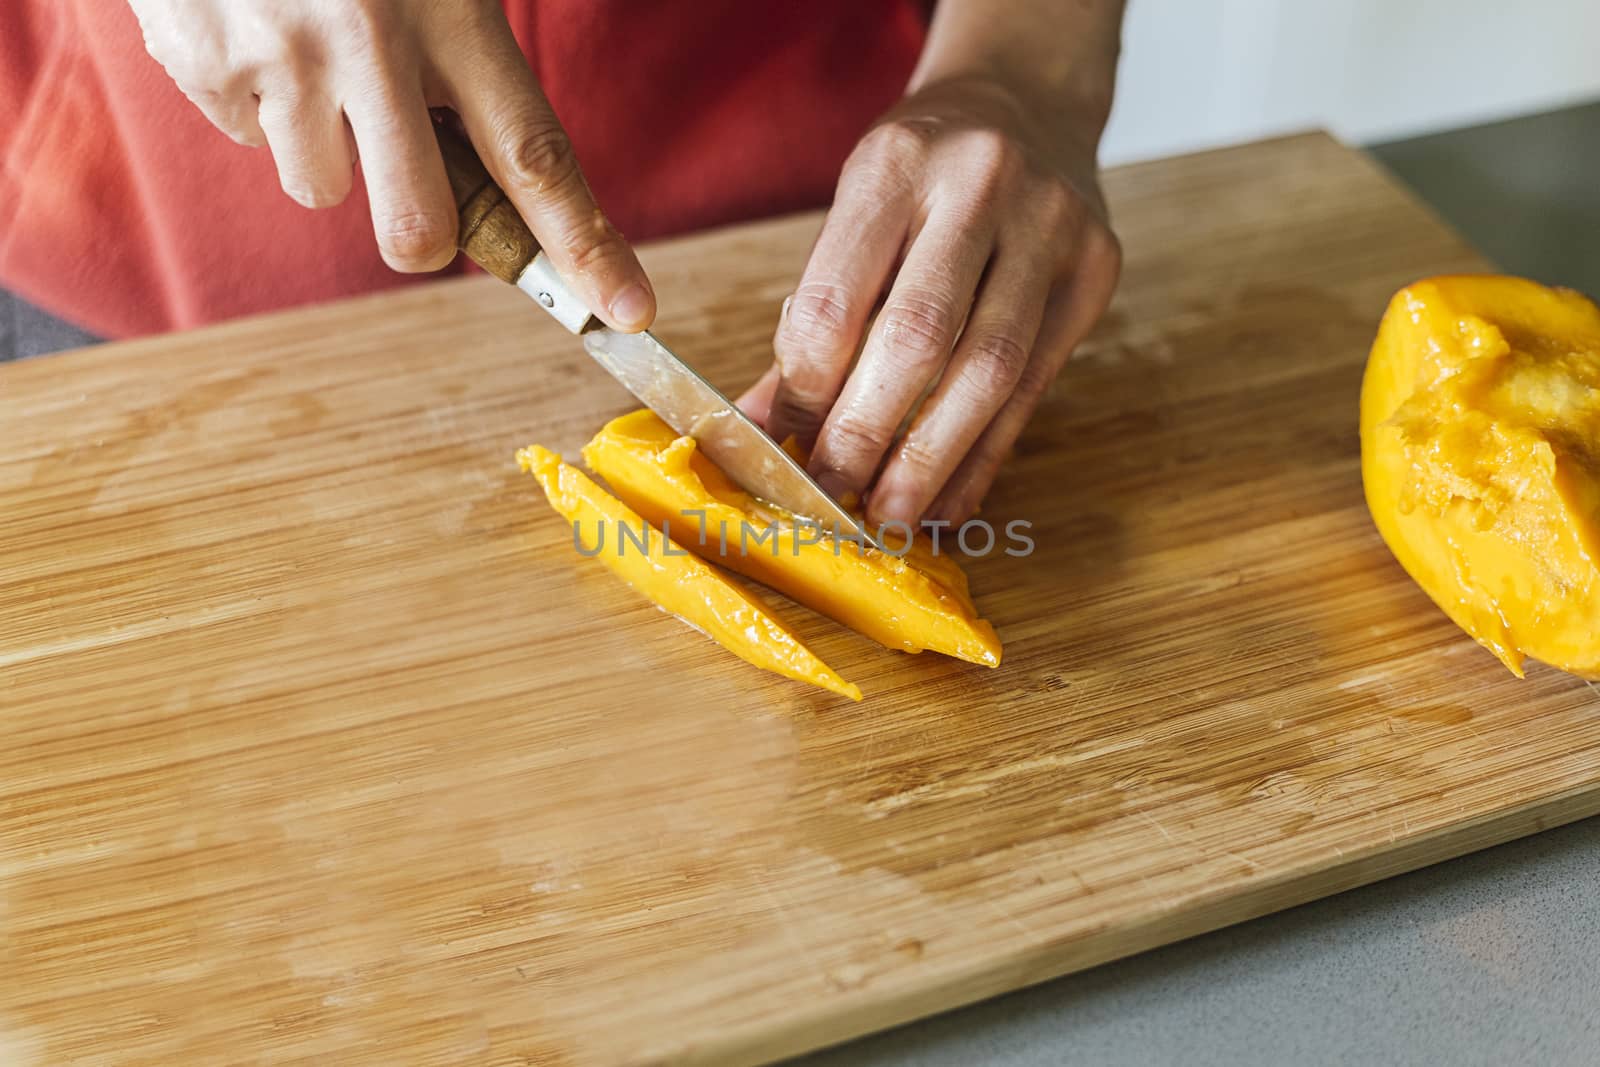 Woman cutting mango on a wooden board to prepare a healthy salad by Daniel_Mato